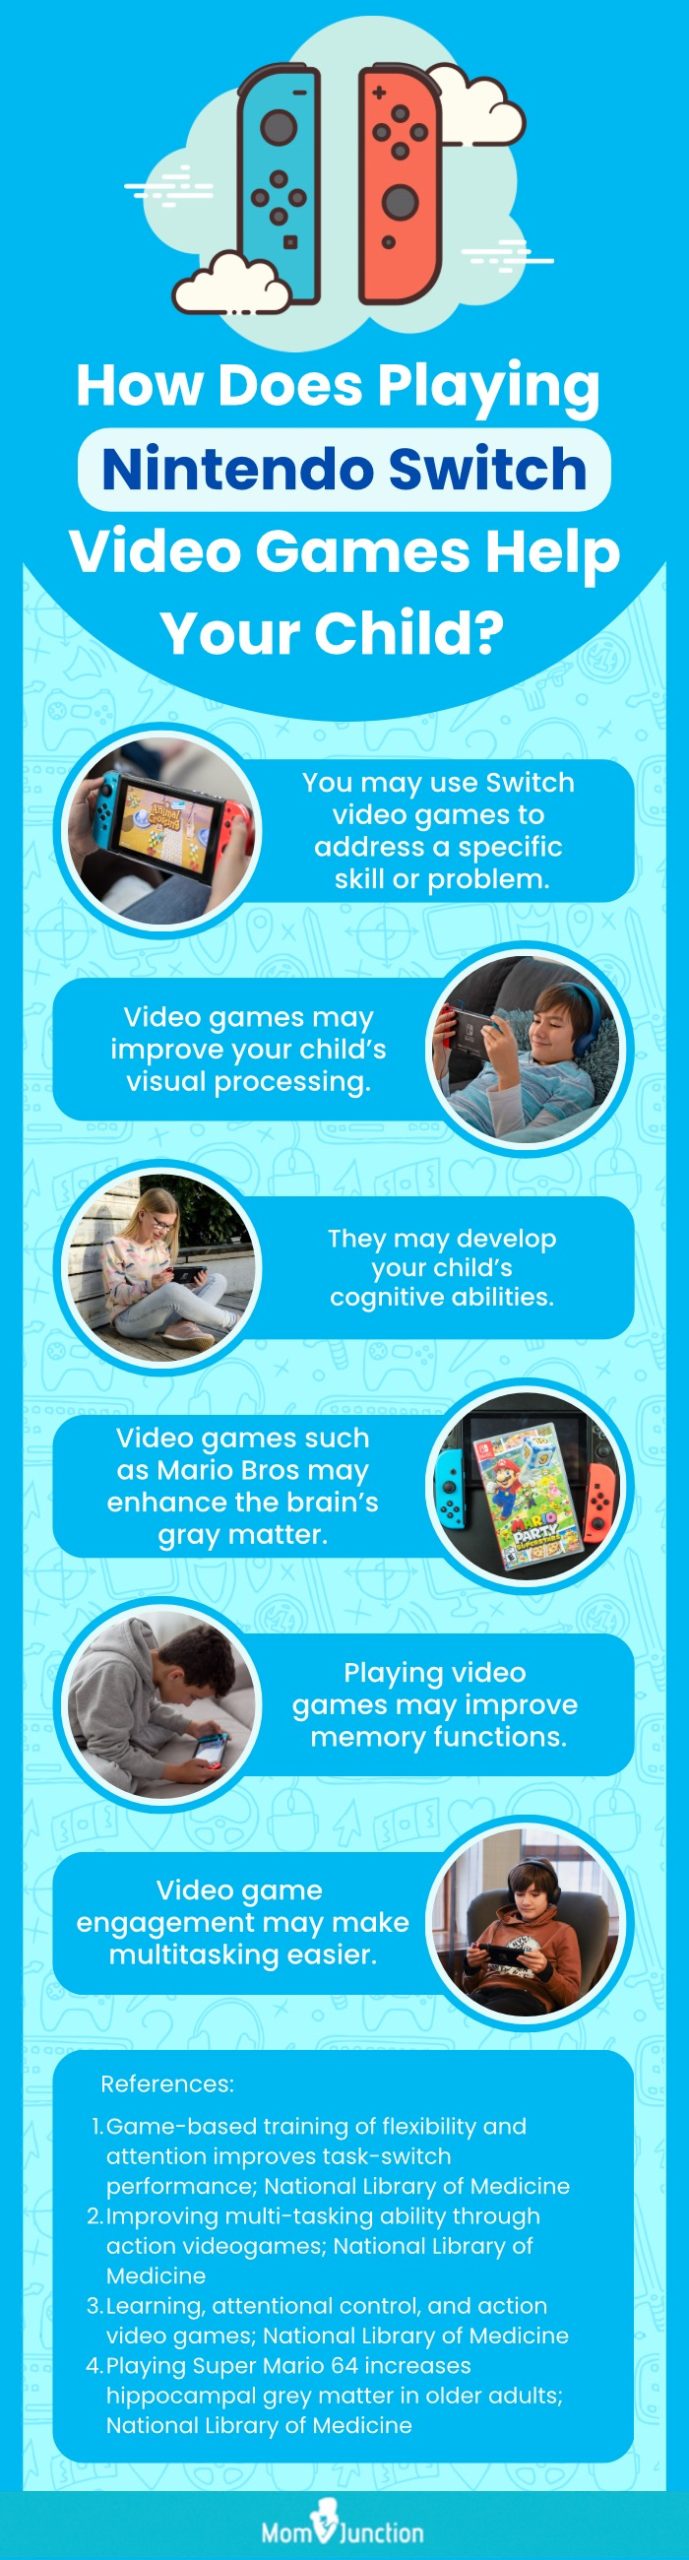 7 Best Educational Nintendo Switch Games for Children